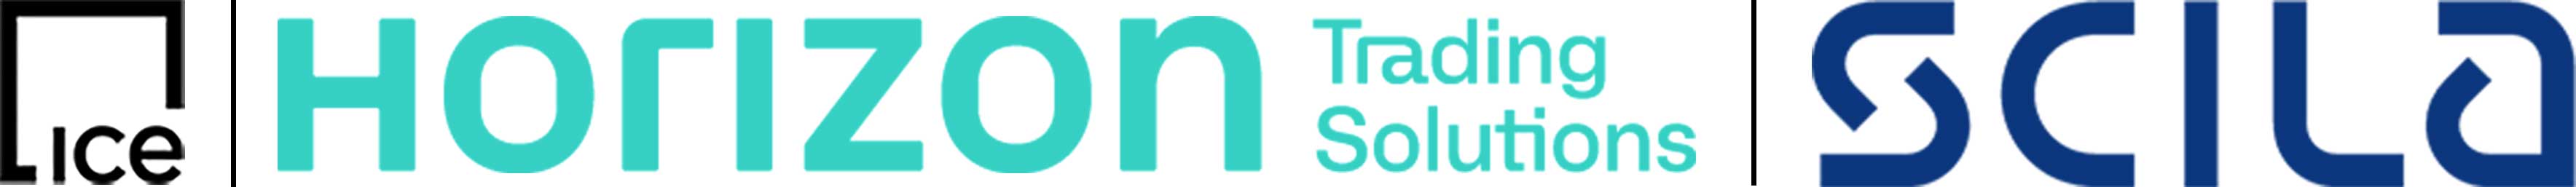 ICE - Horizon Trading Solutions - Scila logos